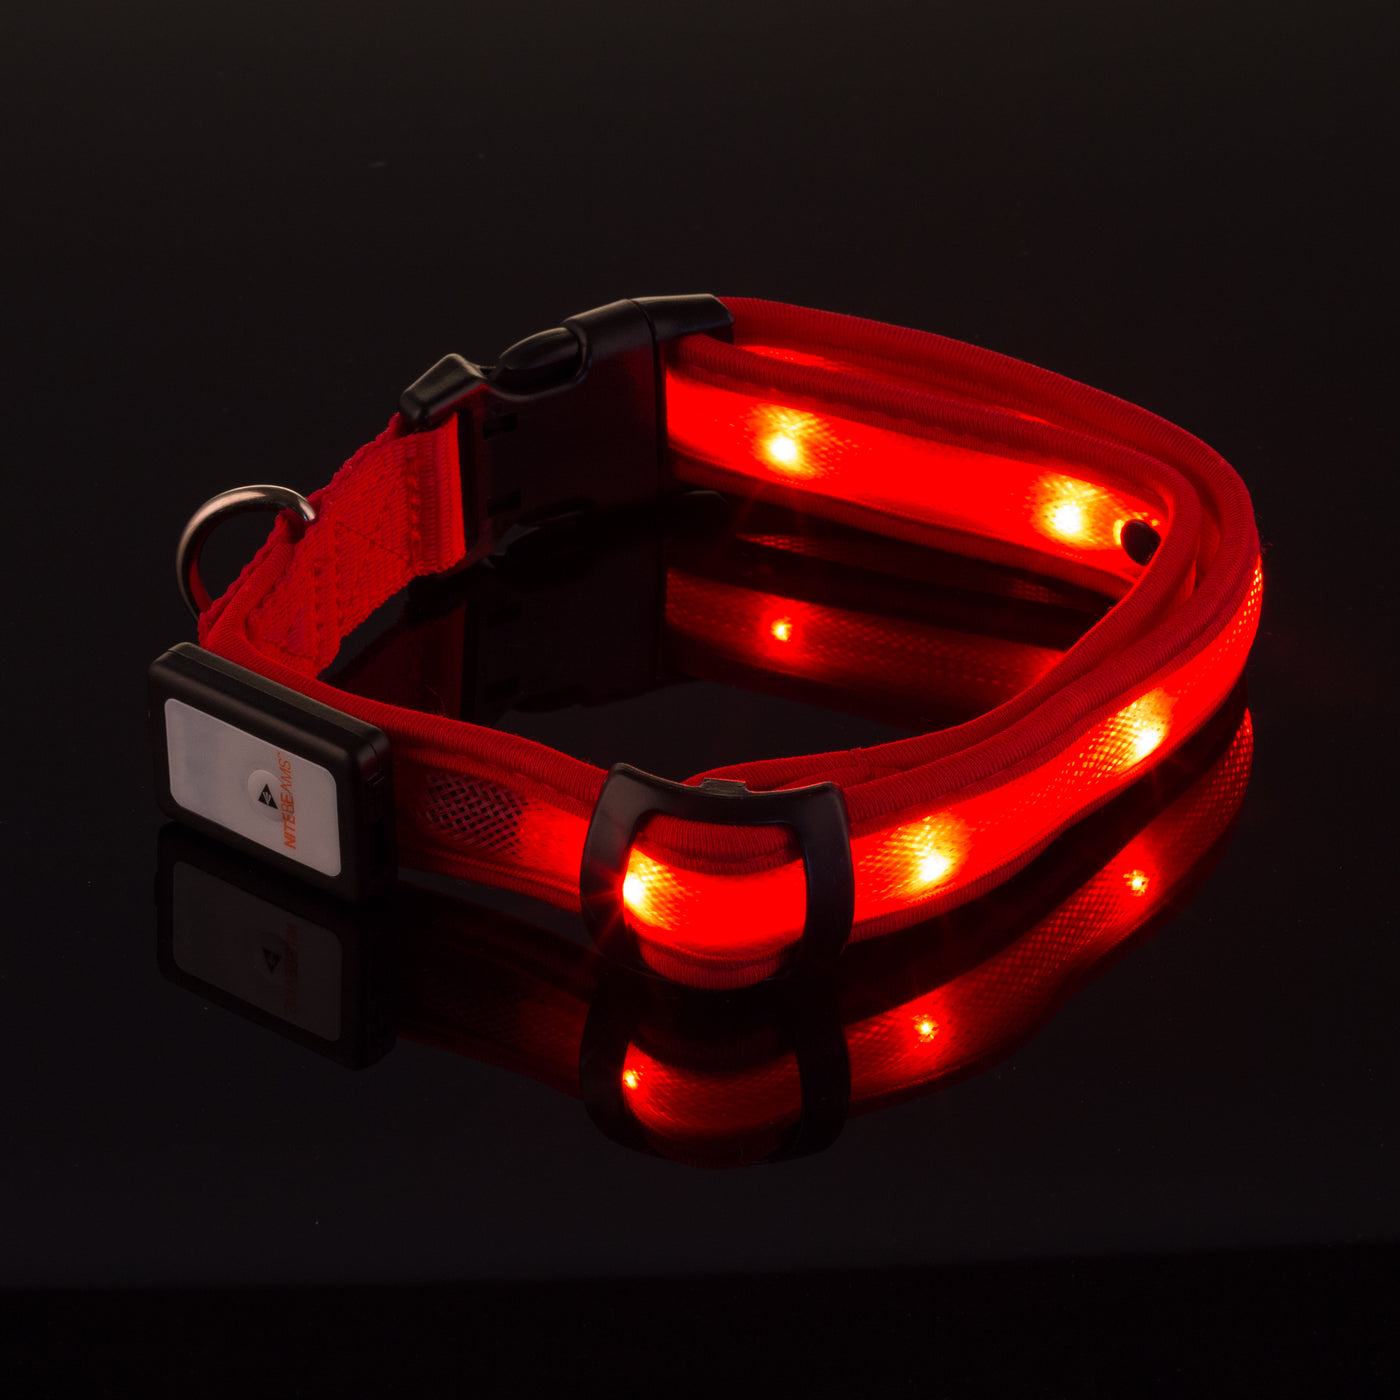 Nite Beams LED USB Rechargeable Dog Collar